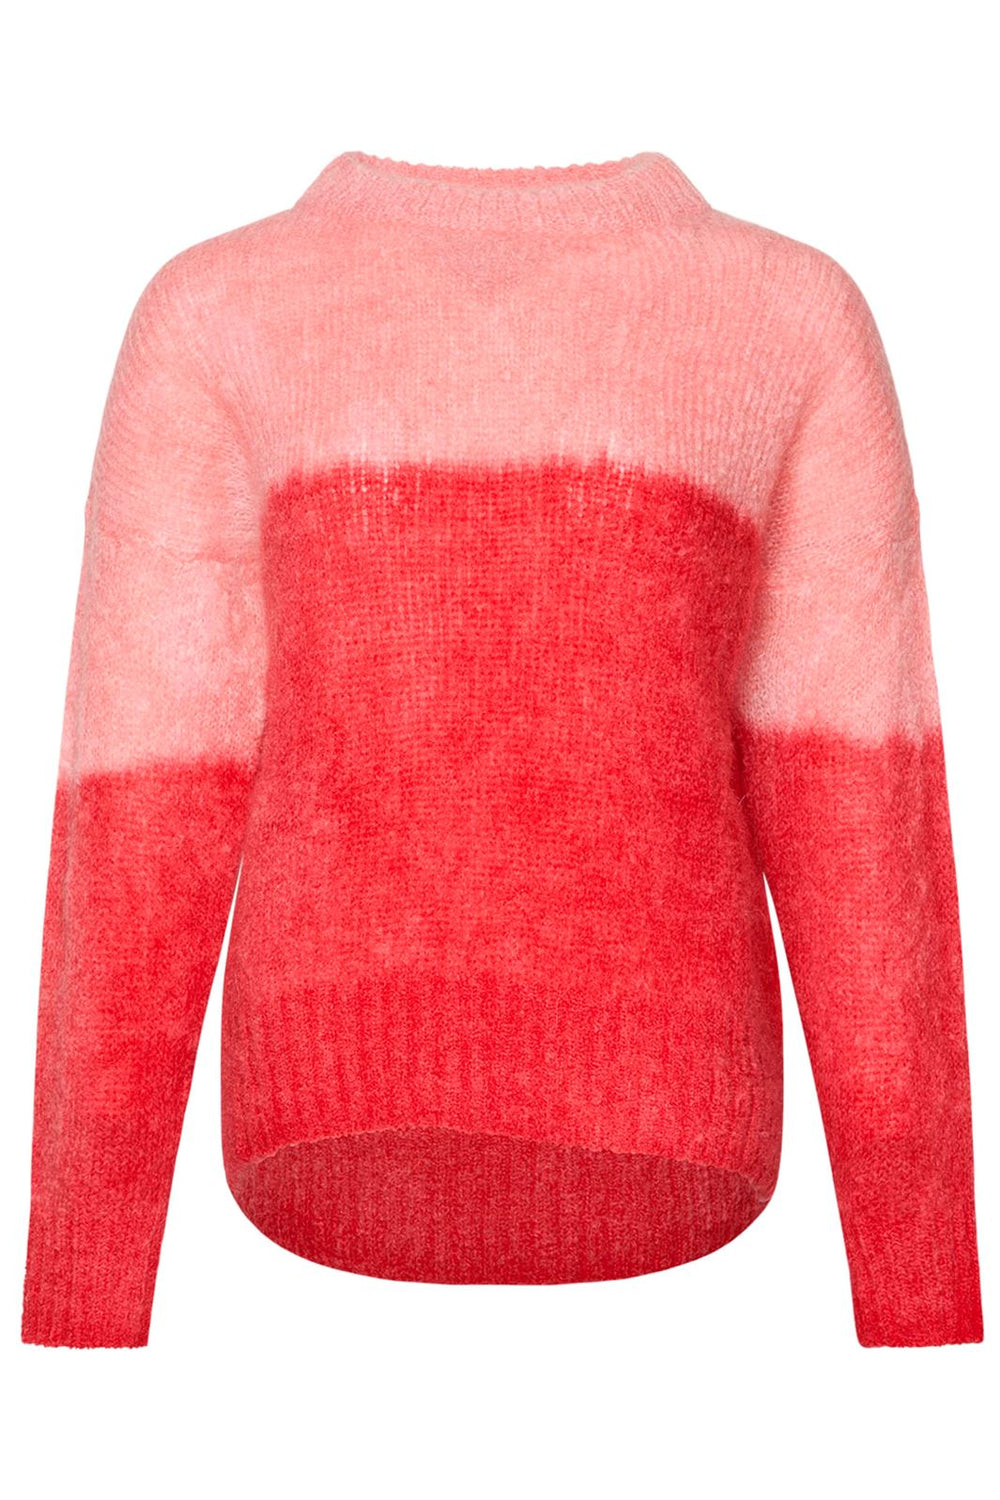 Forudbestilling - Noella - Belinda Dip Sweater - Pink (Februar) Strikbluser 